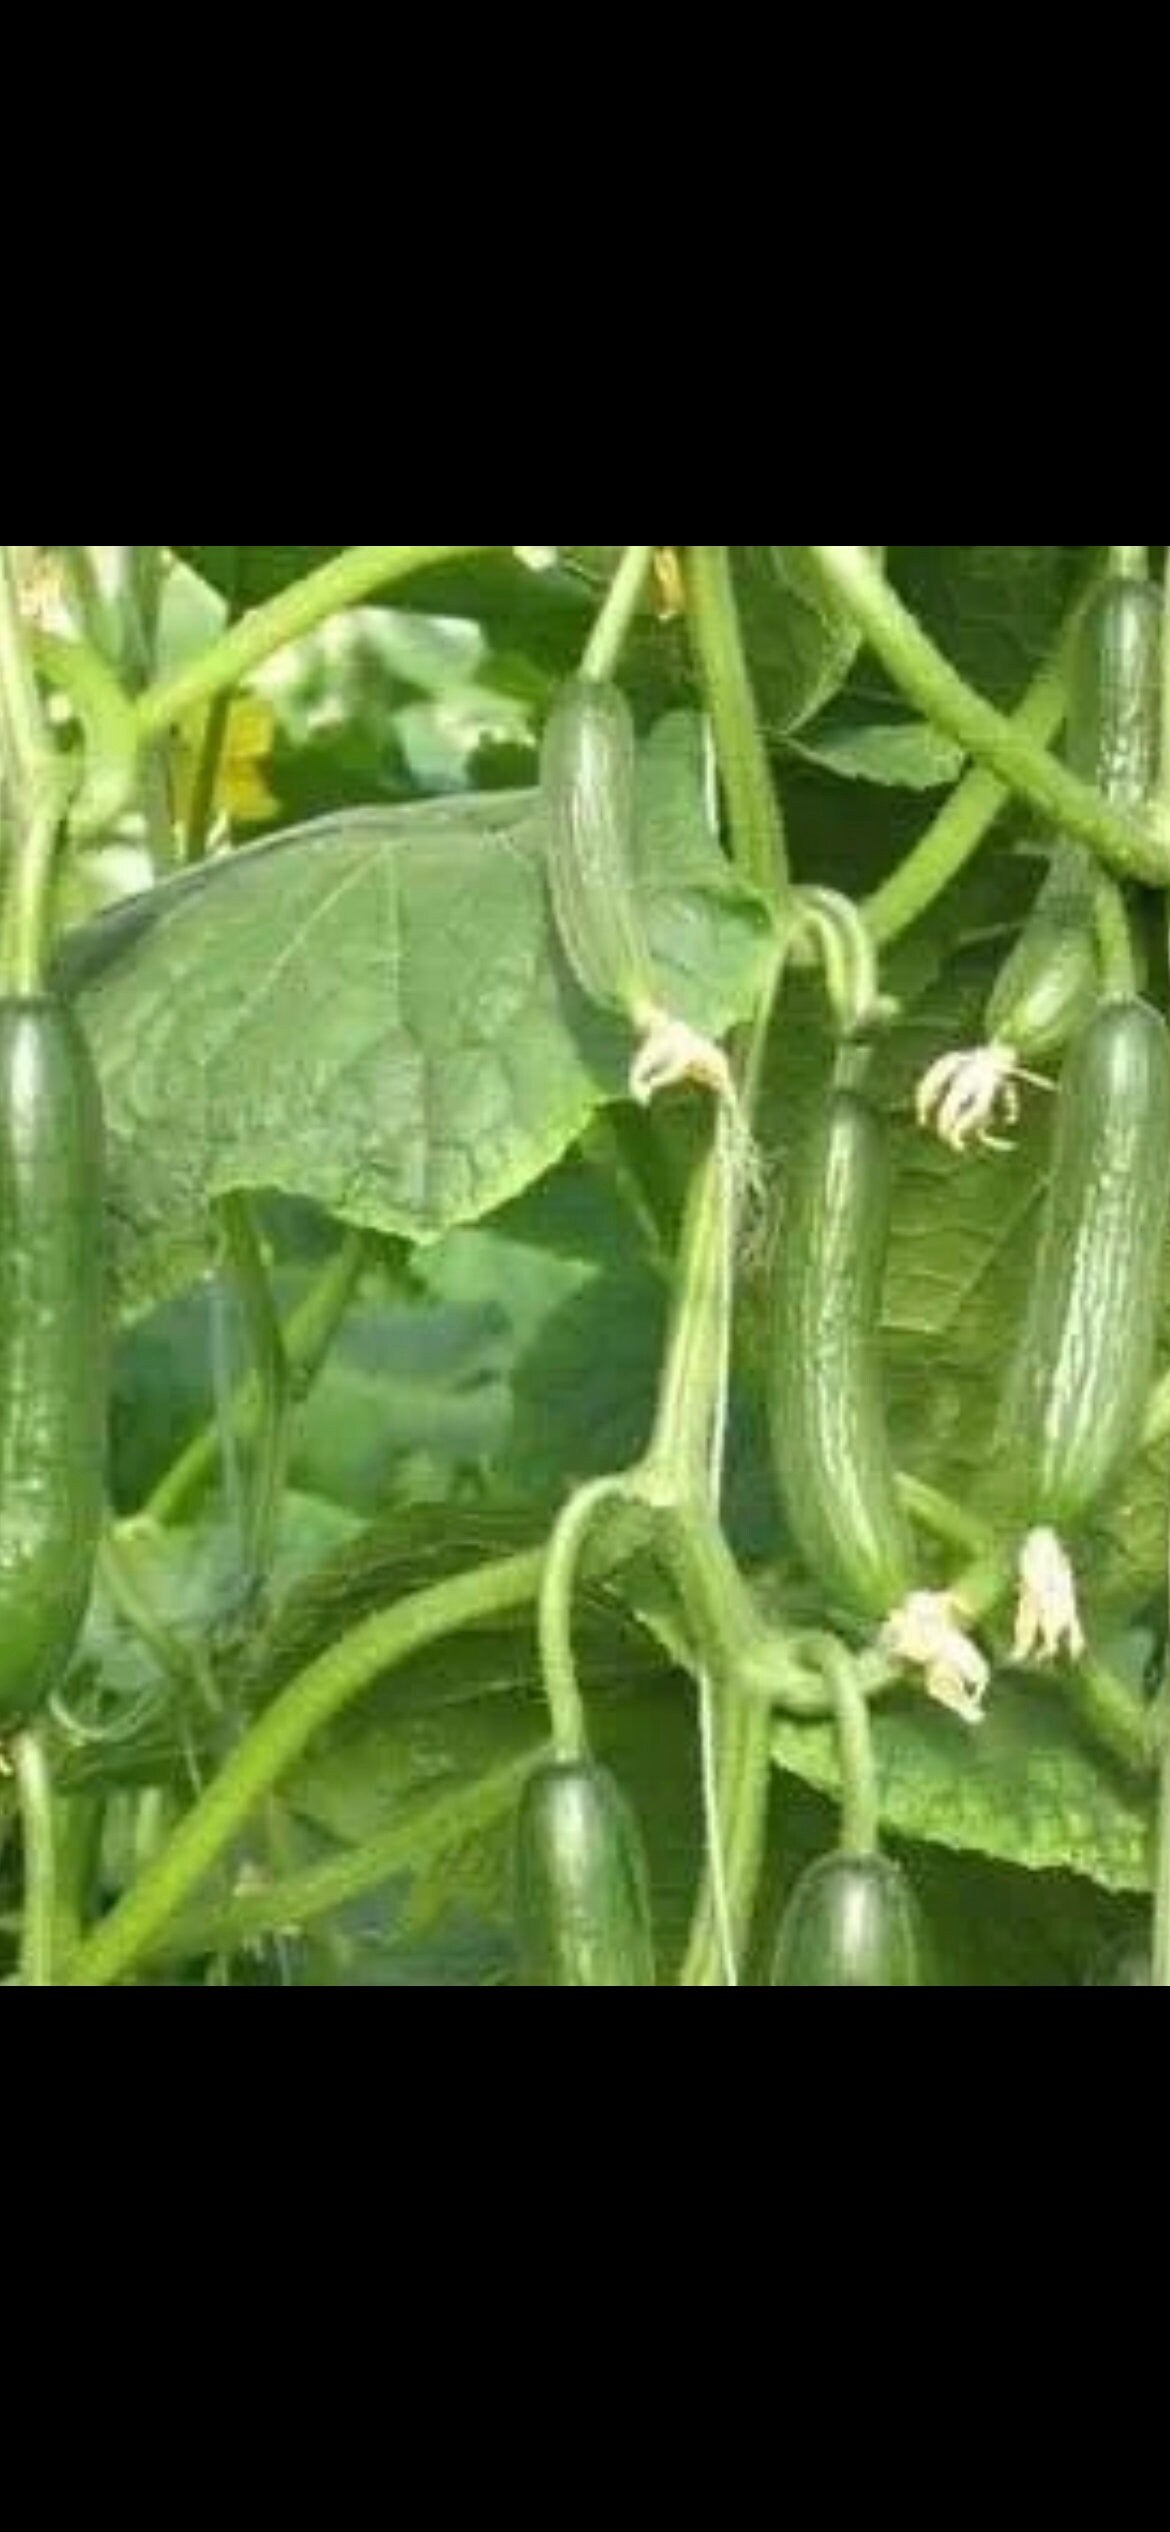 Fruit Cucumber Seeds - 甜脆水果黄瓜种子-40 Seeds per Pack | Dutch Cucumber Variety | Prickle-Free, Thin Skin, Abundant Moisture